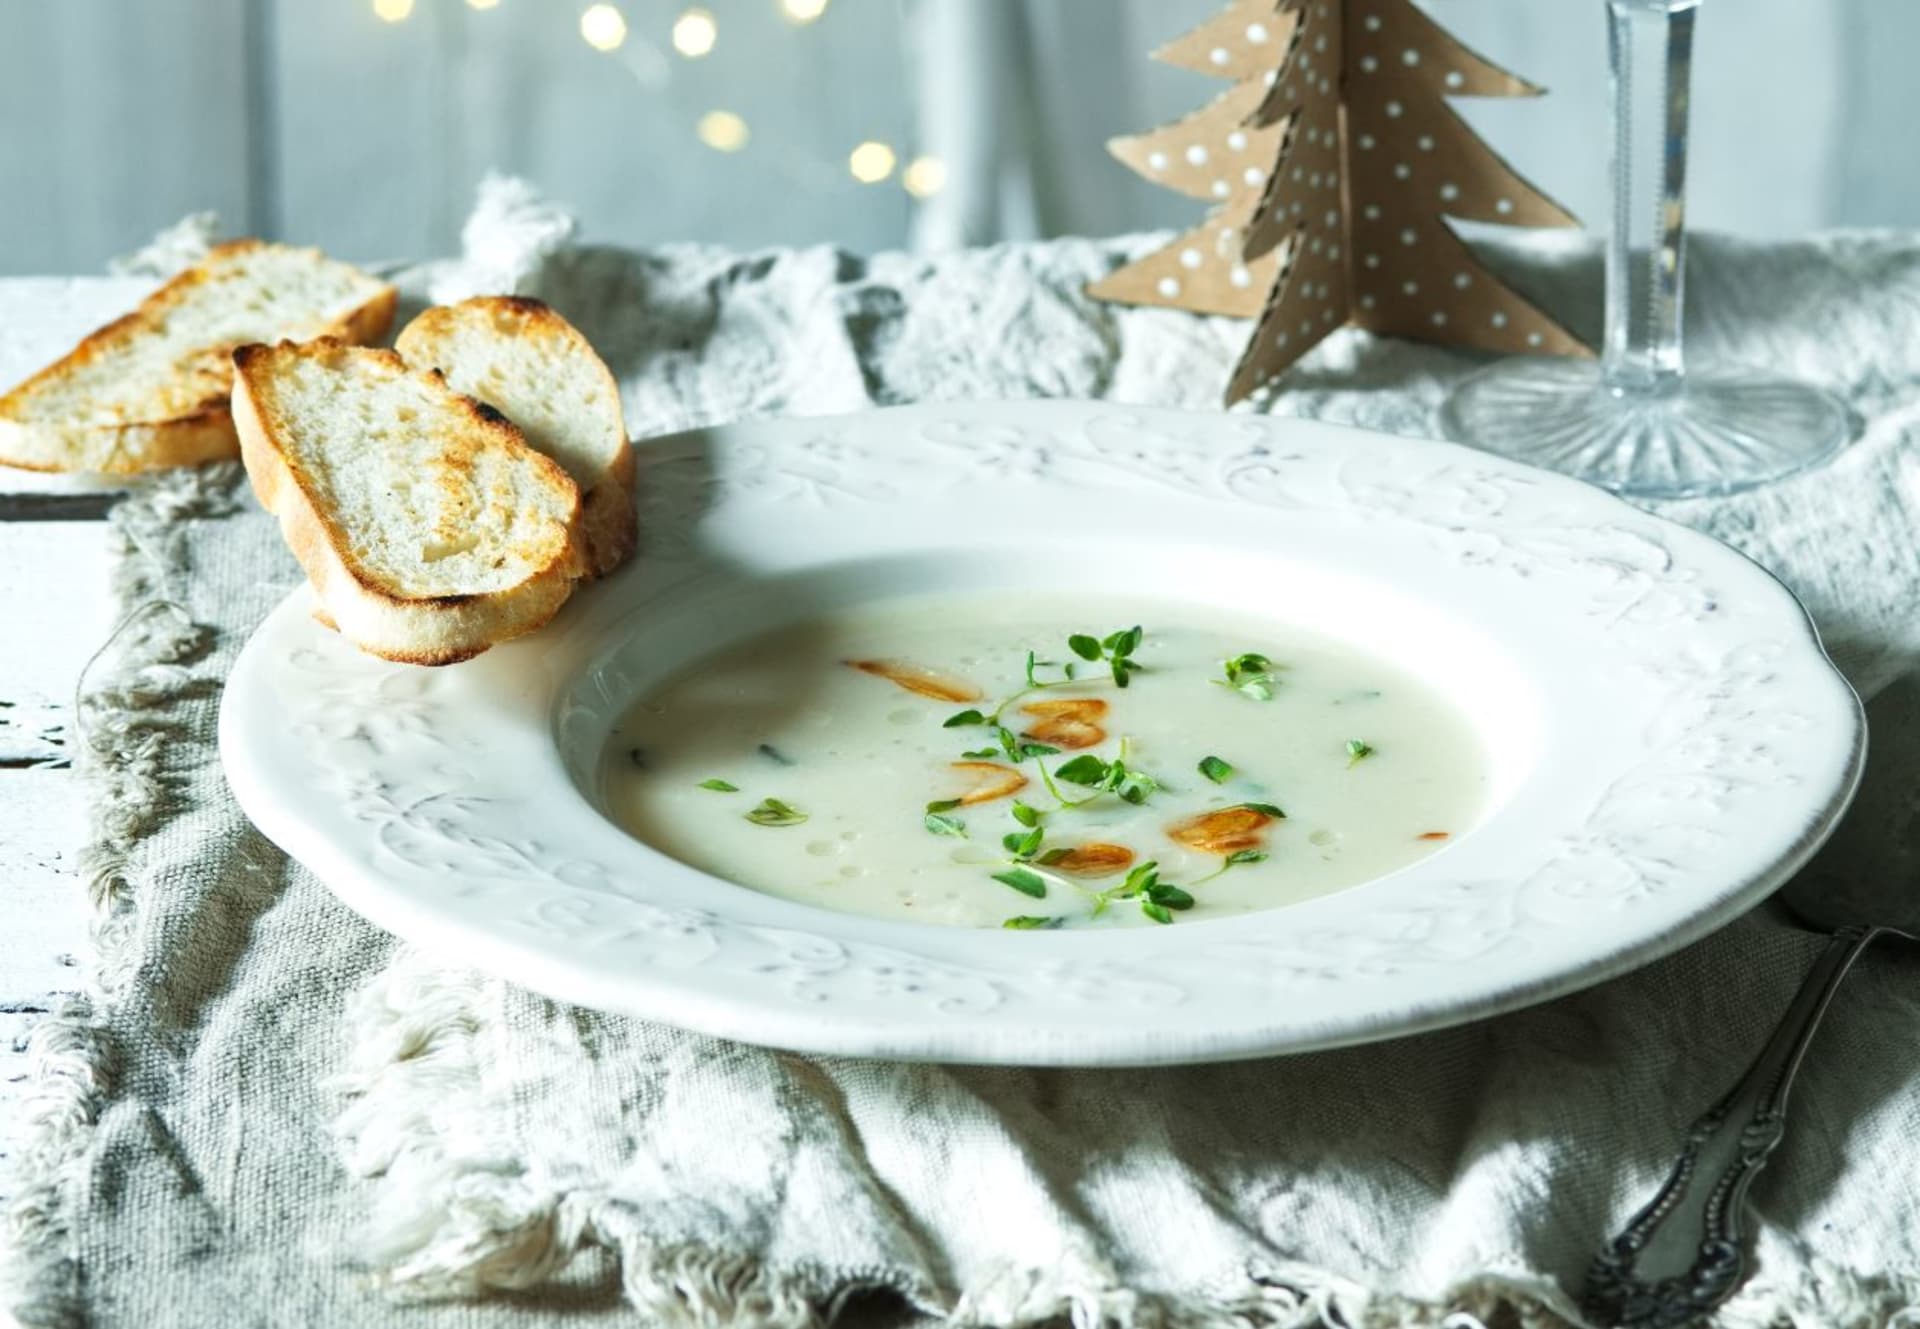 Treasures of French cuisine: festive garlic cream with toast